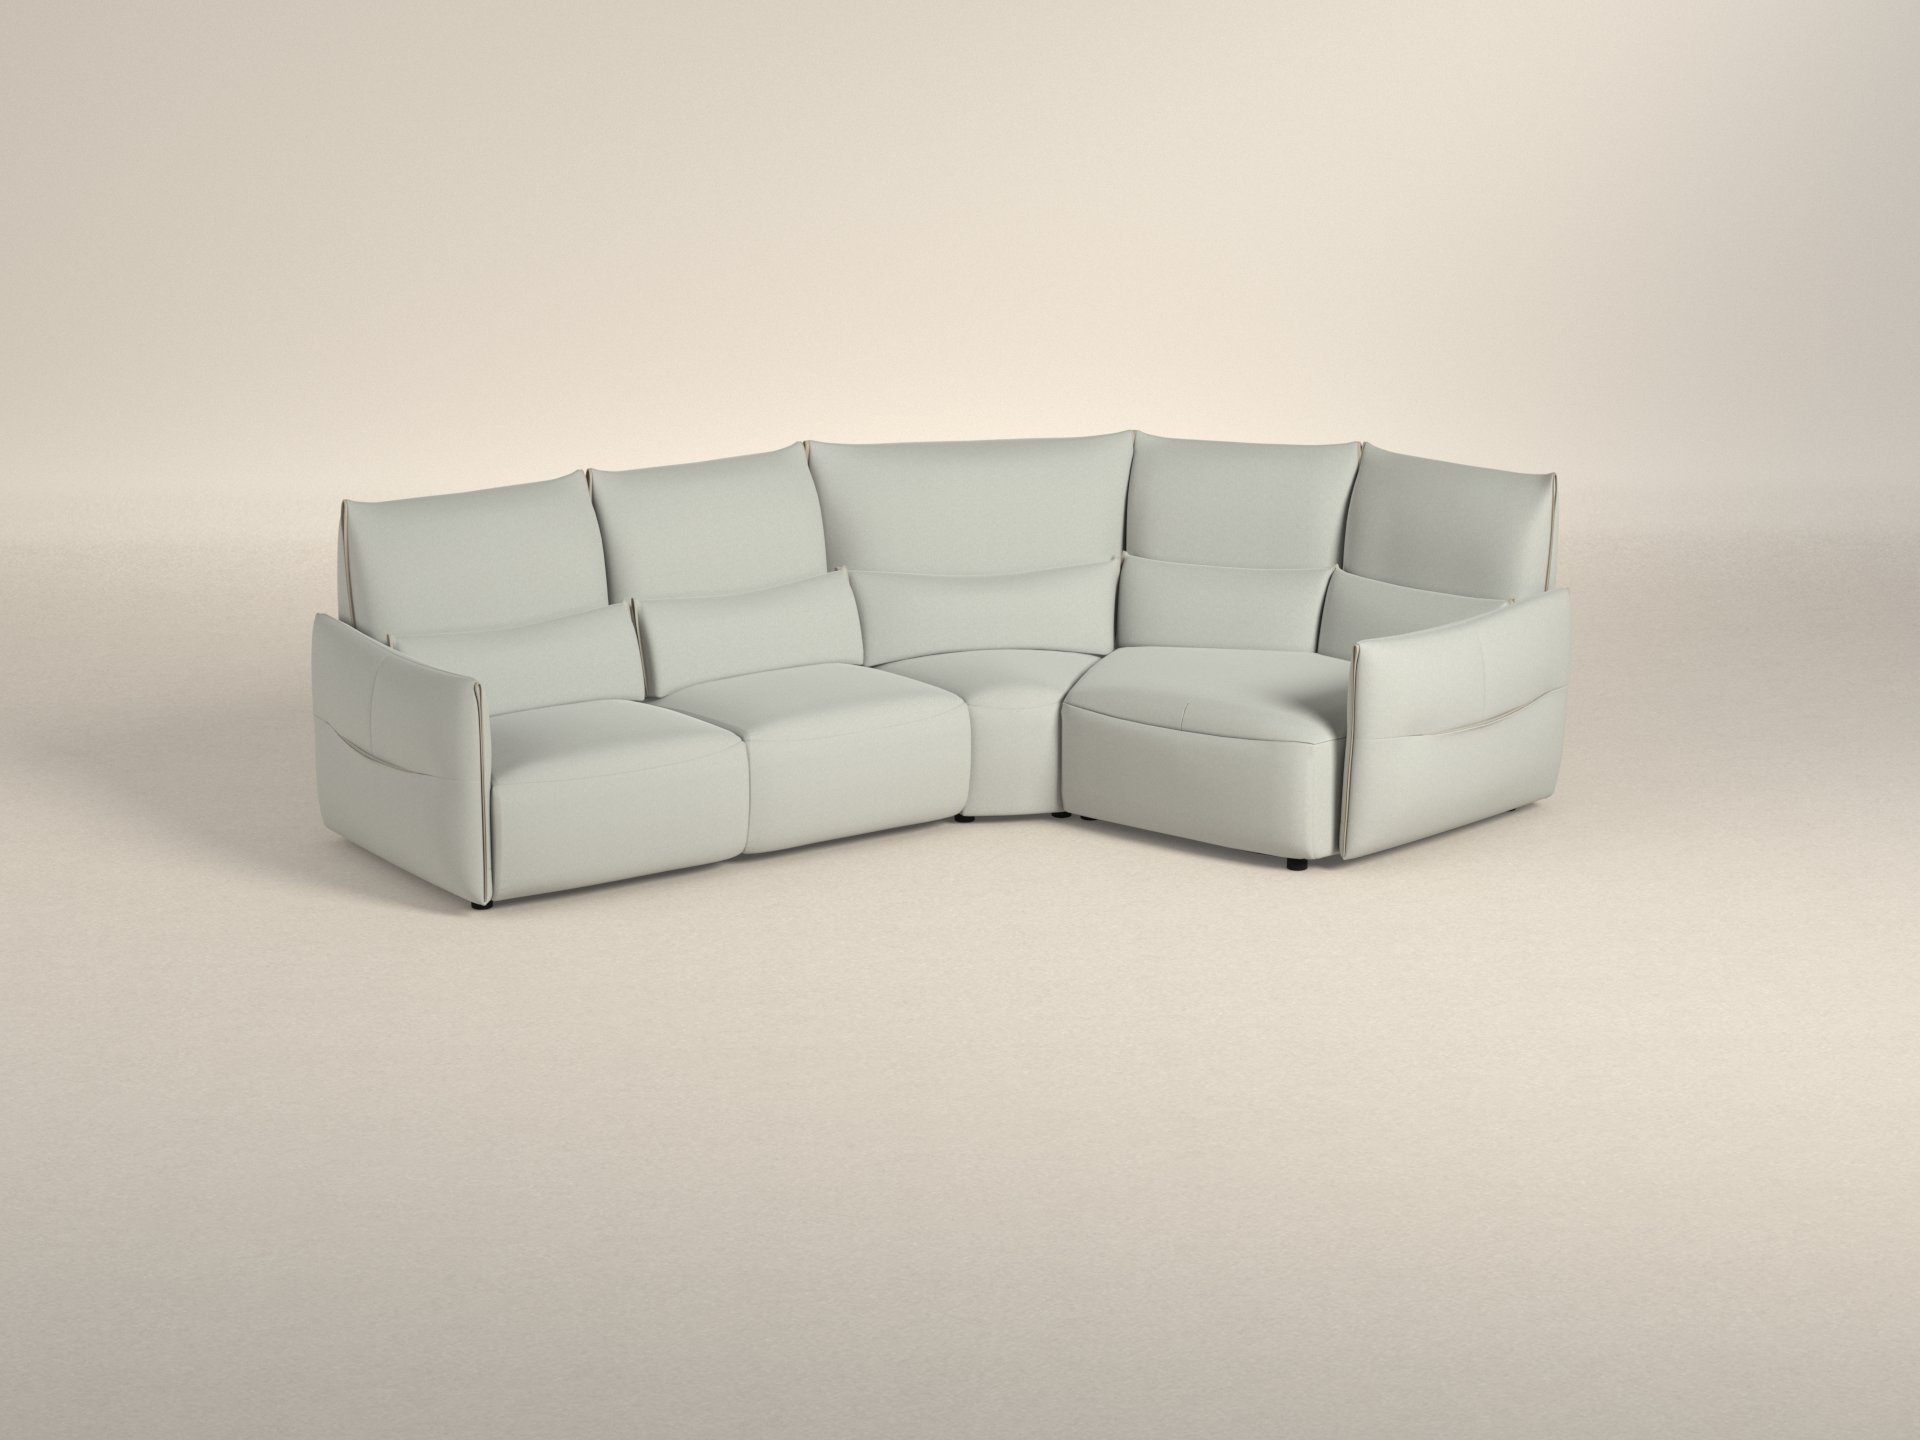 Preset default image - Wellbe 带右侧转角座椅的组合式沙发 - 織物